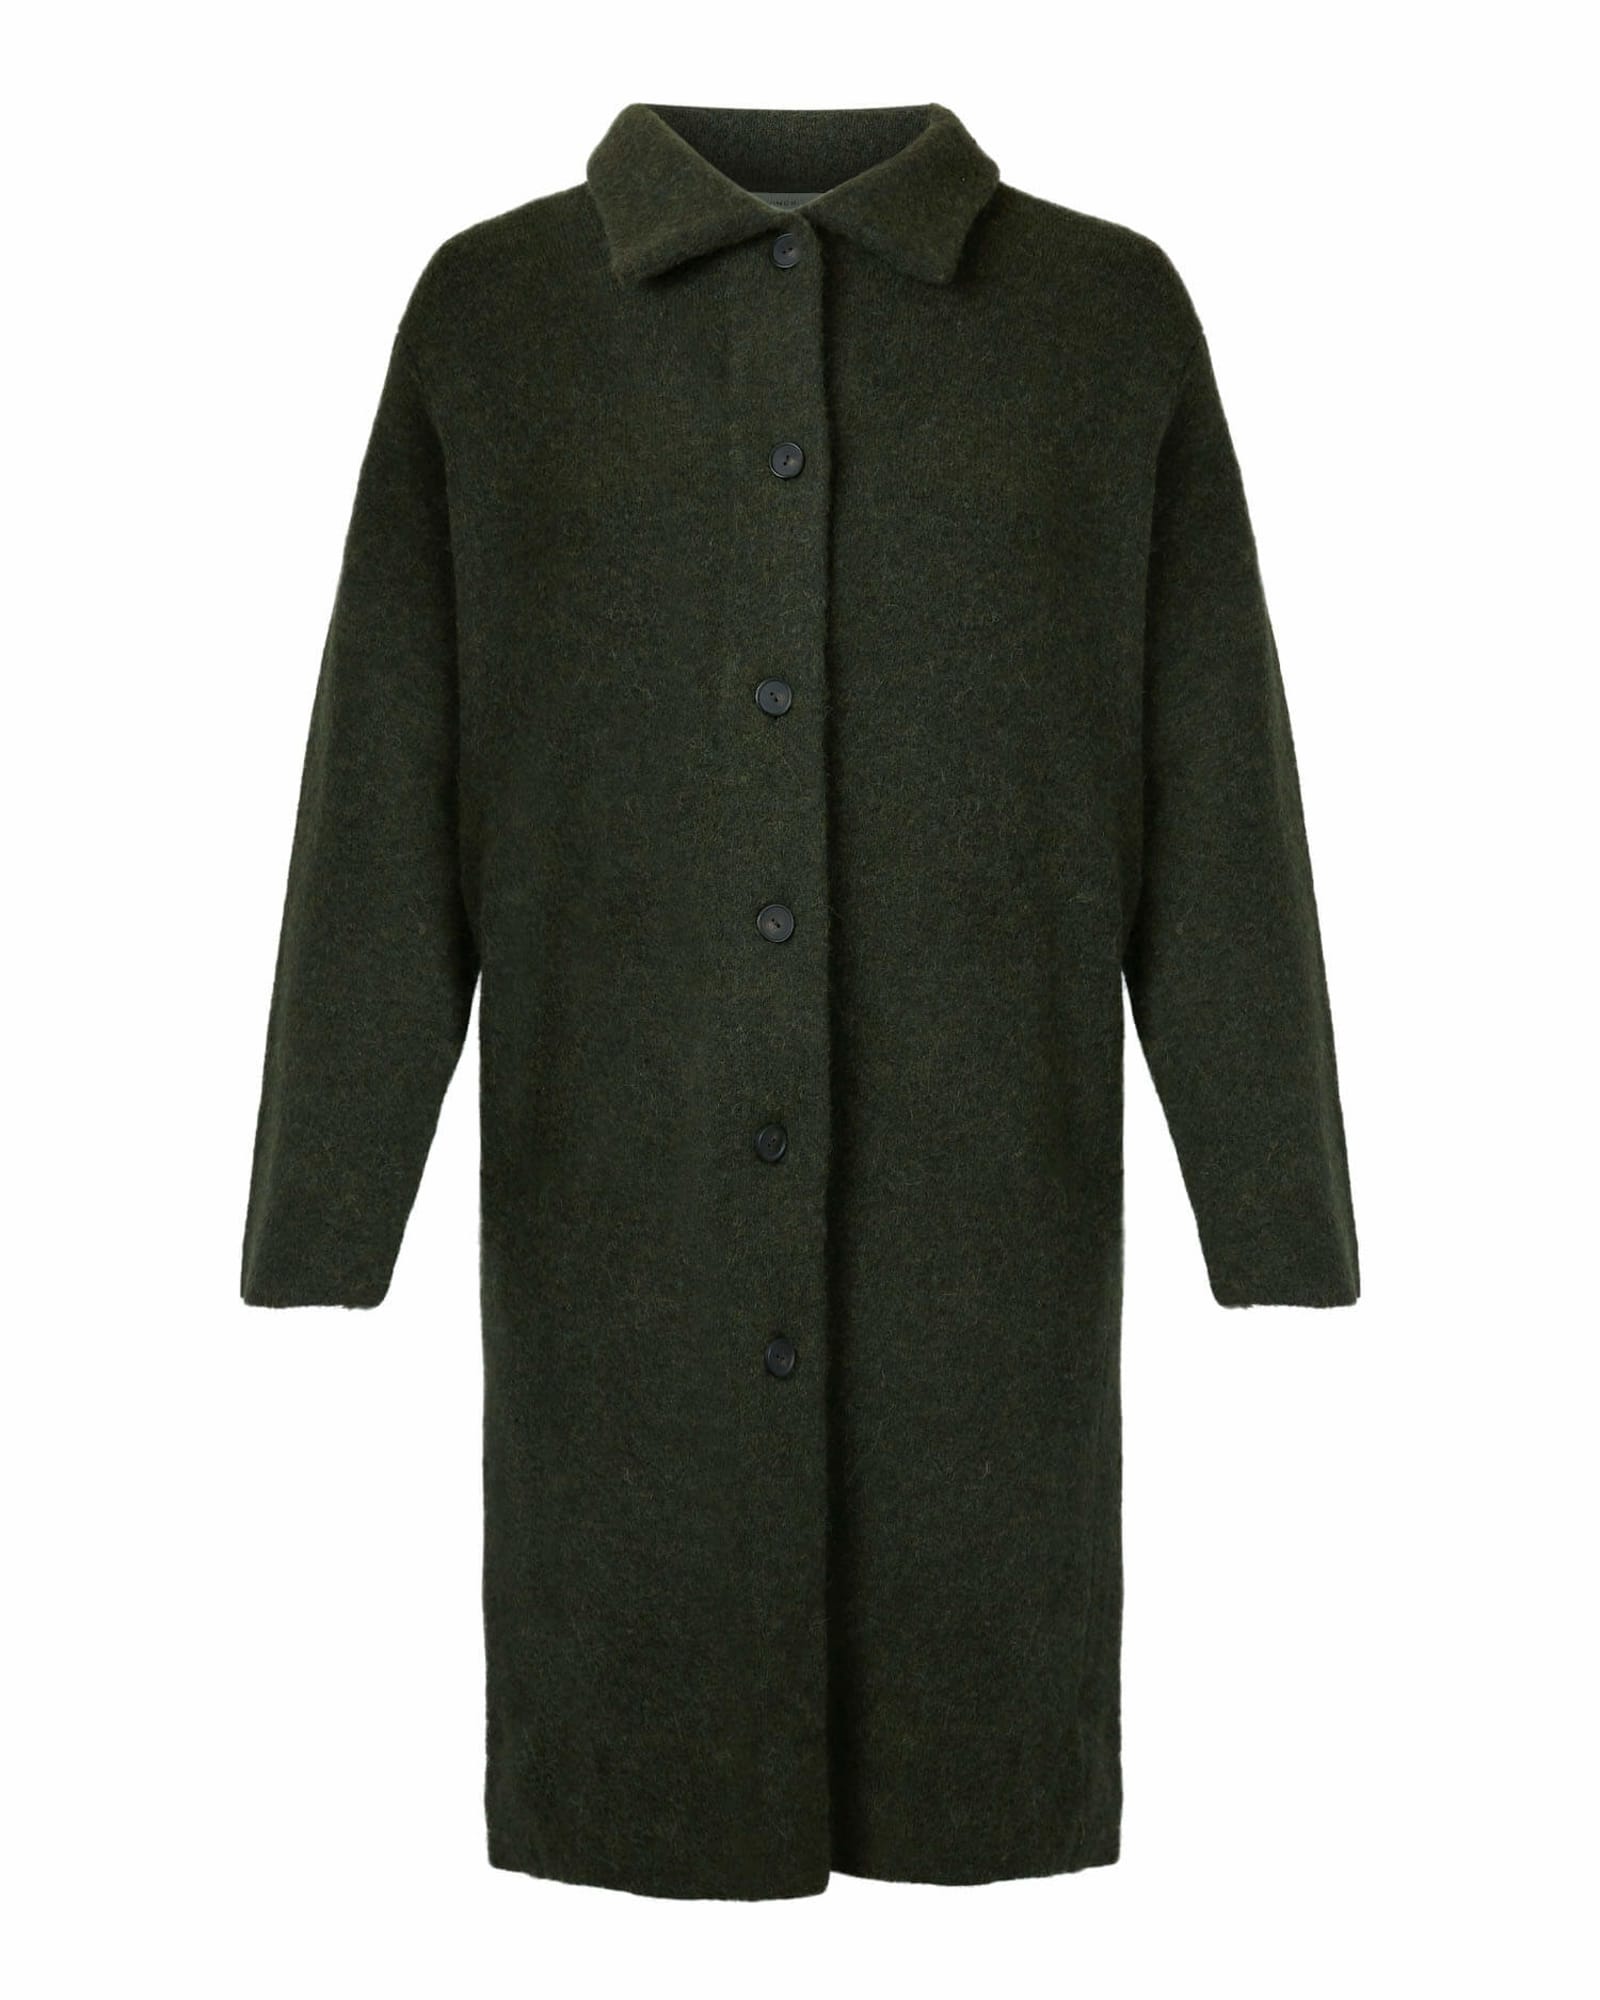 Collared Cardigan Coat | Olive Green